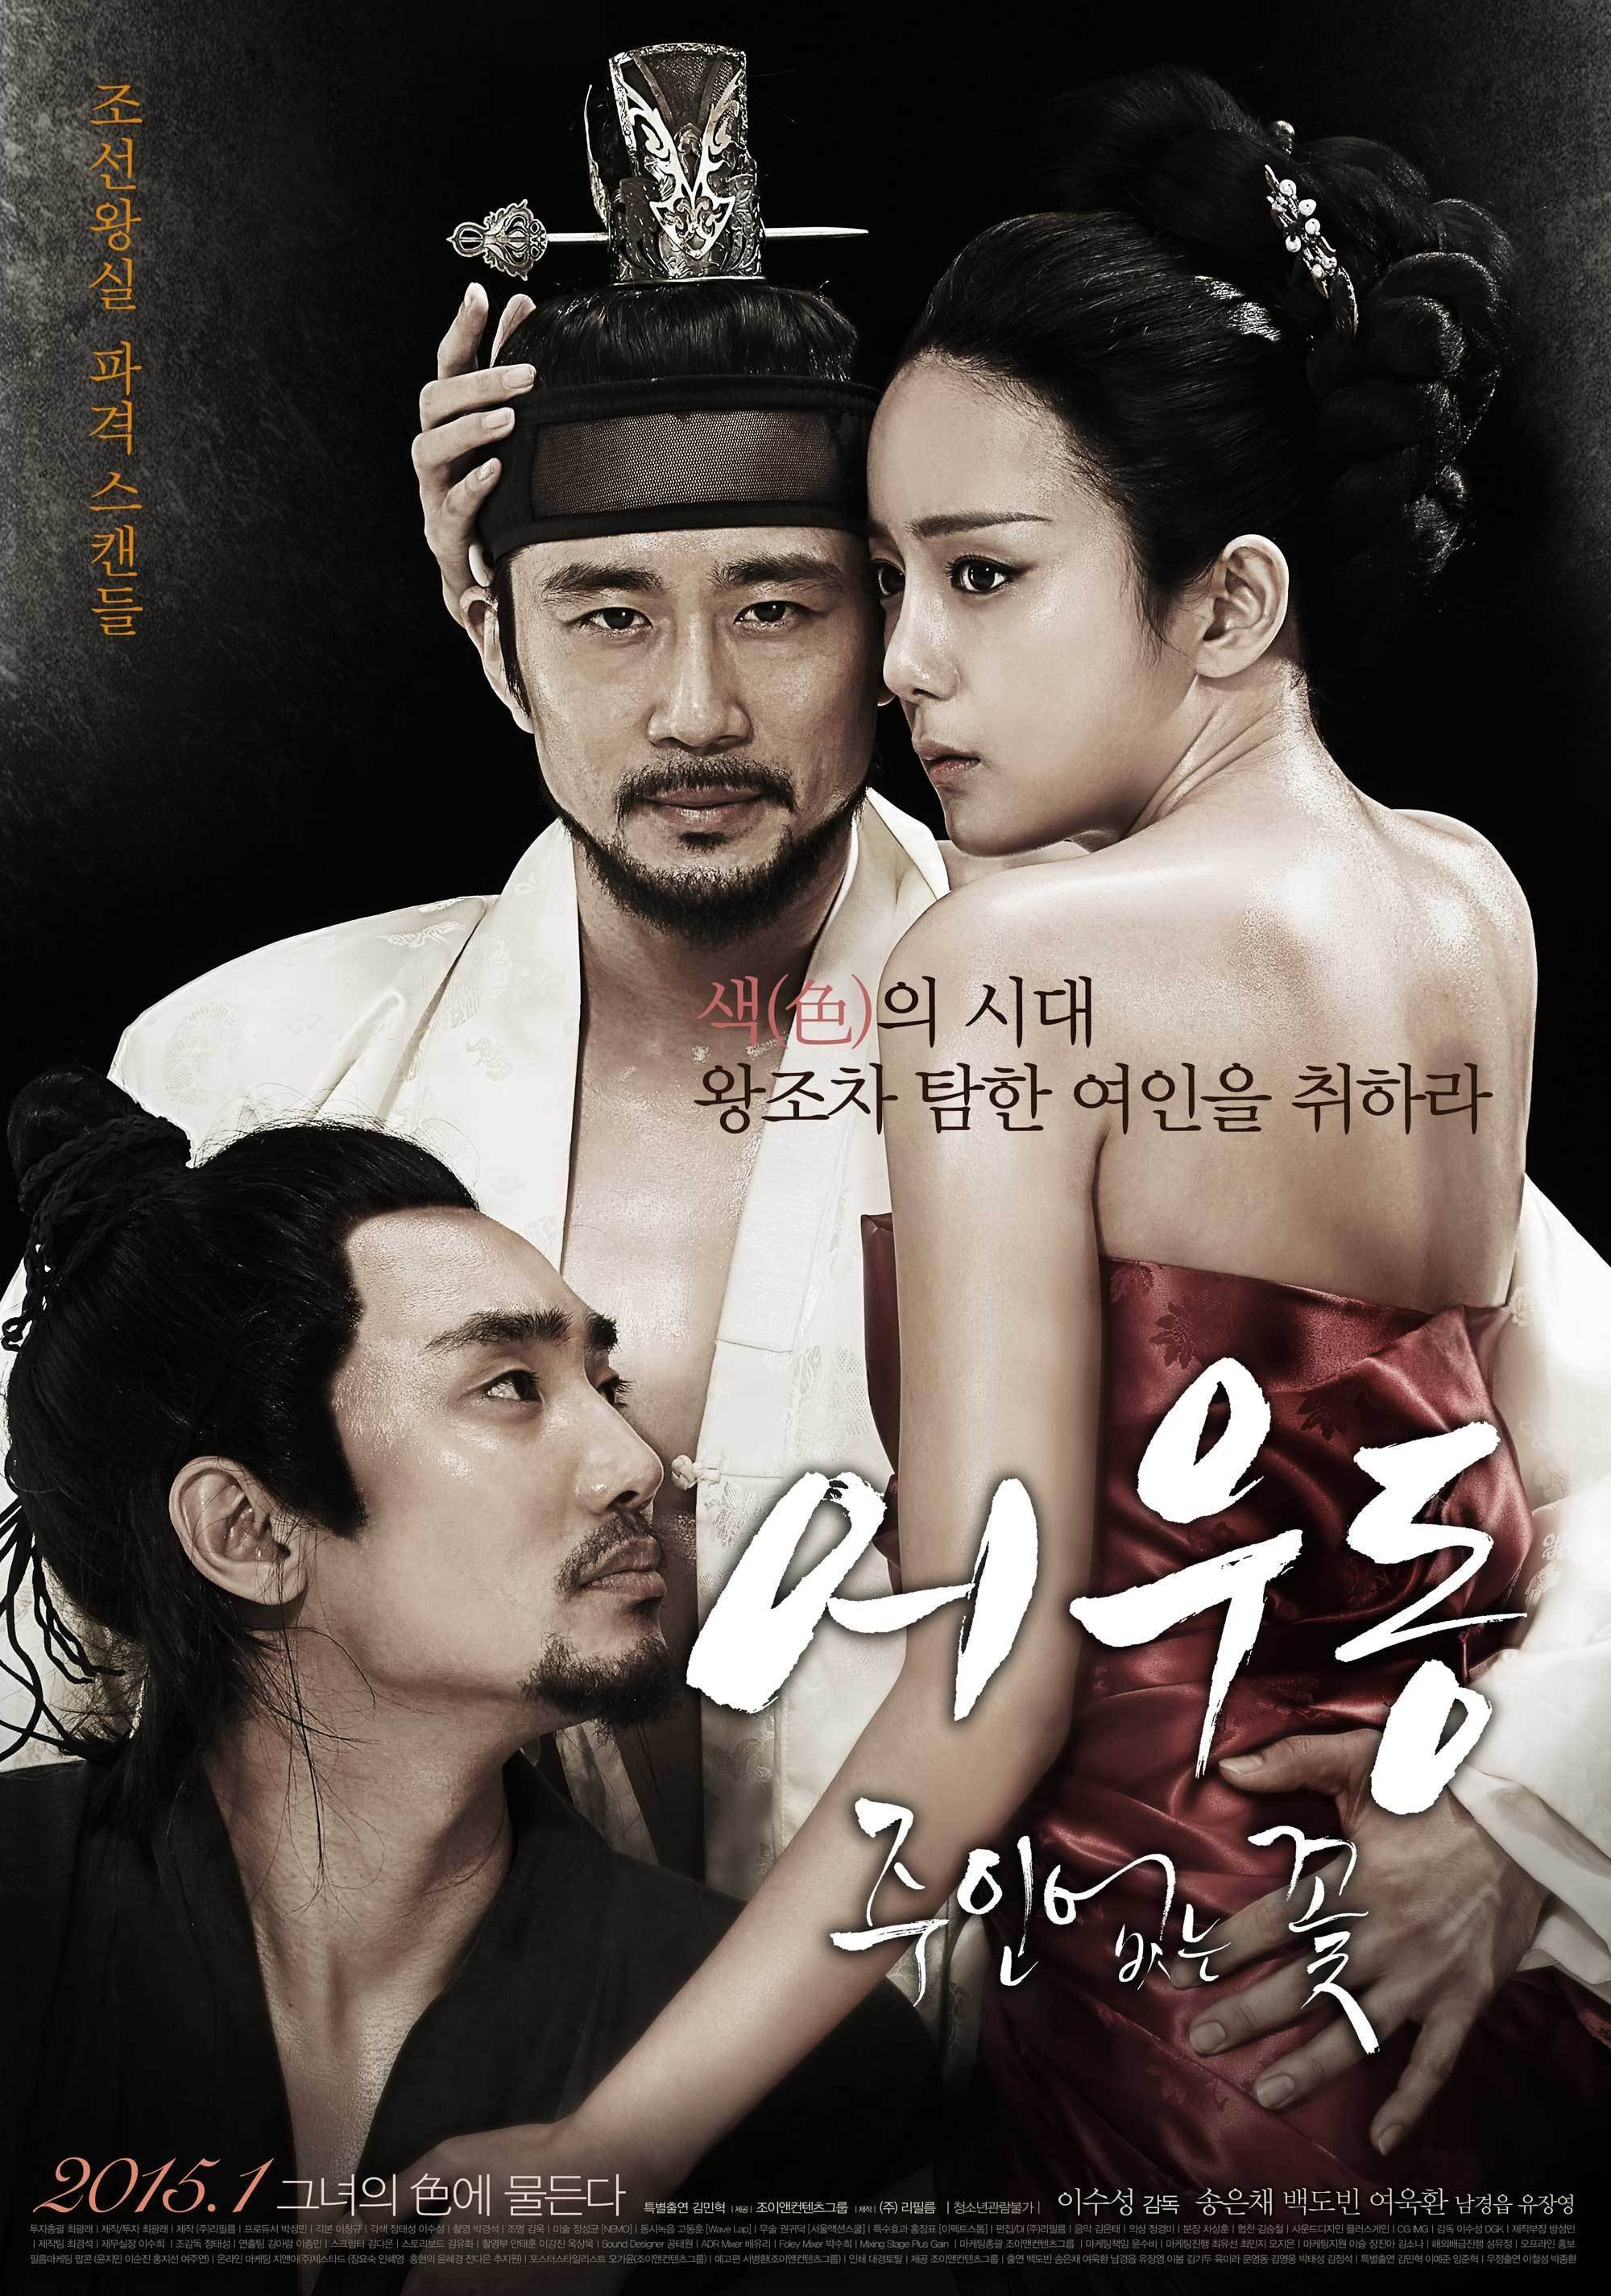 Korean Movies Opening Today 2015 01 29 In Korea Hancinema The Free Download Nude Photo Gallery